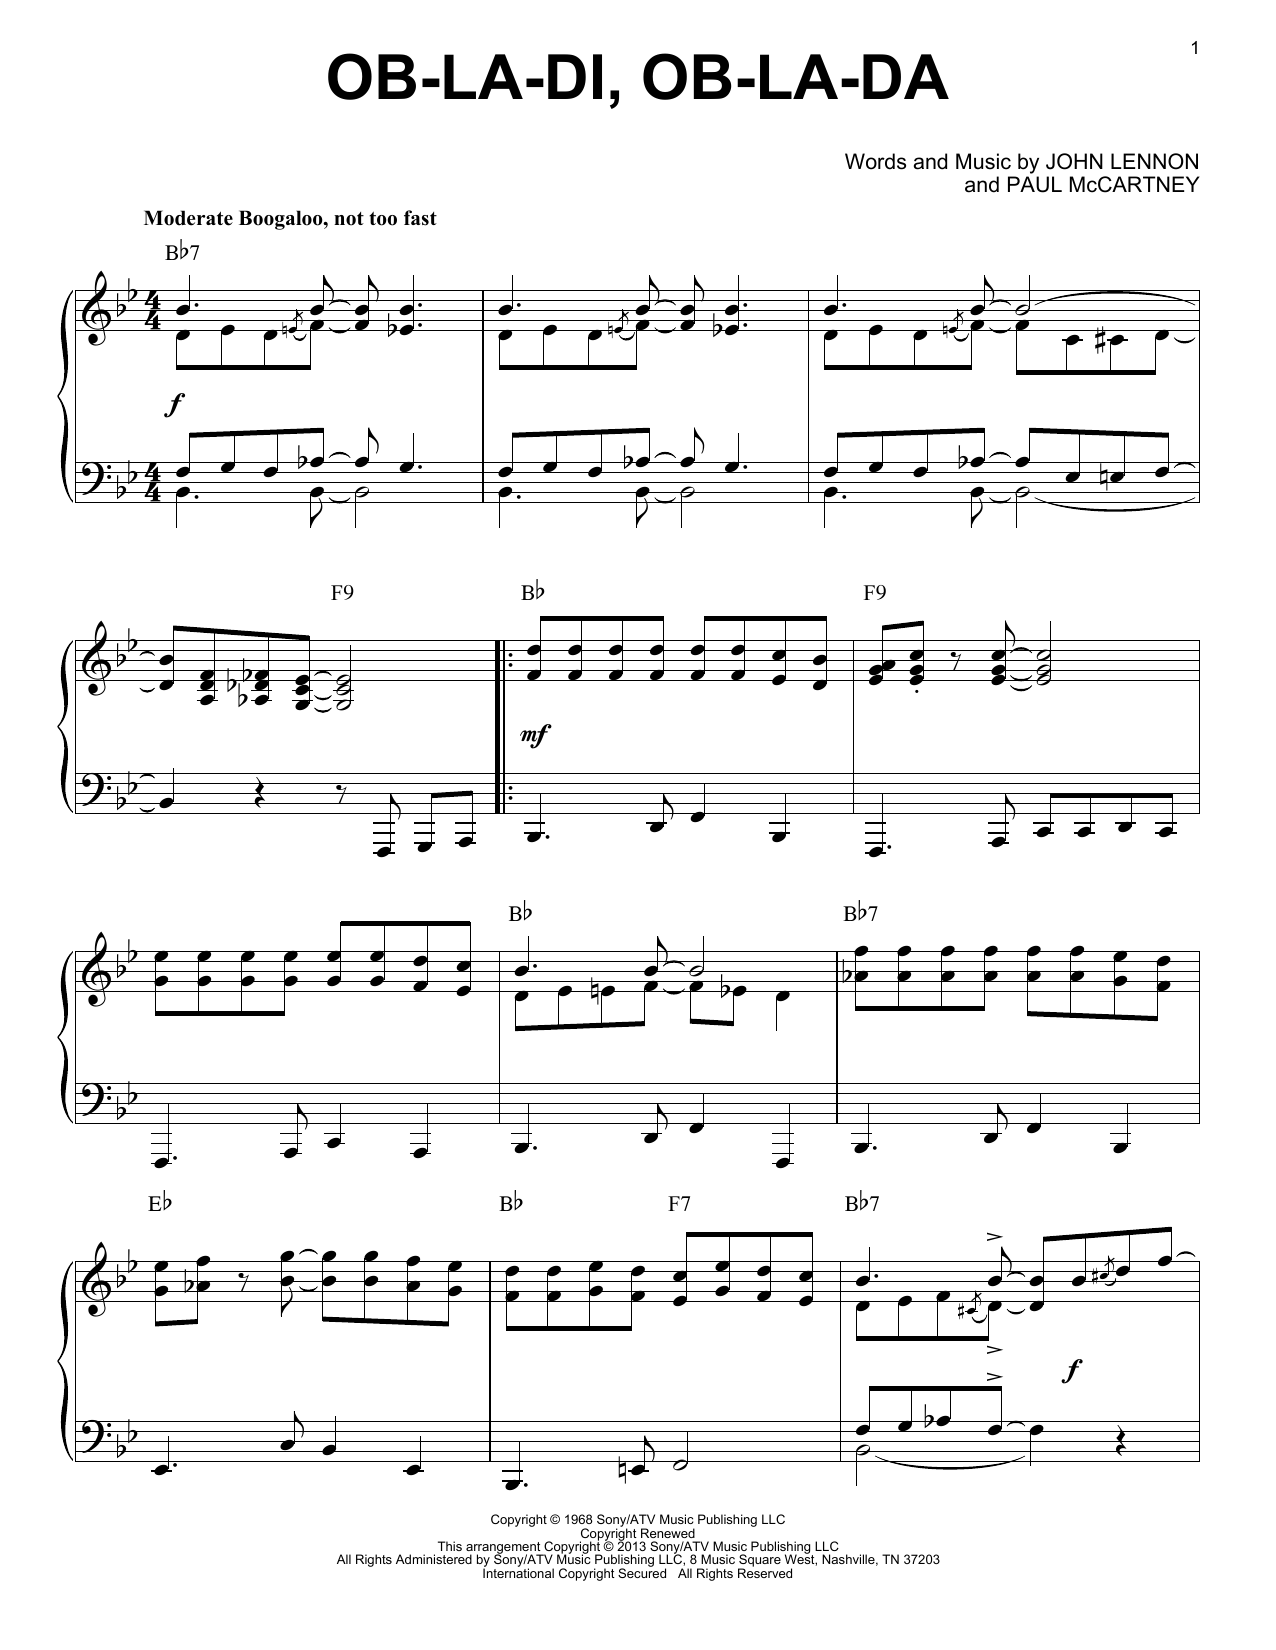 The Beatles Ob-La-Di, Ob-La-Da [Jazz version] (arr. Brent Edstrom) Sheet Music Notes & Chords for Piano - Download or Print PDF